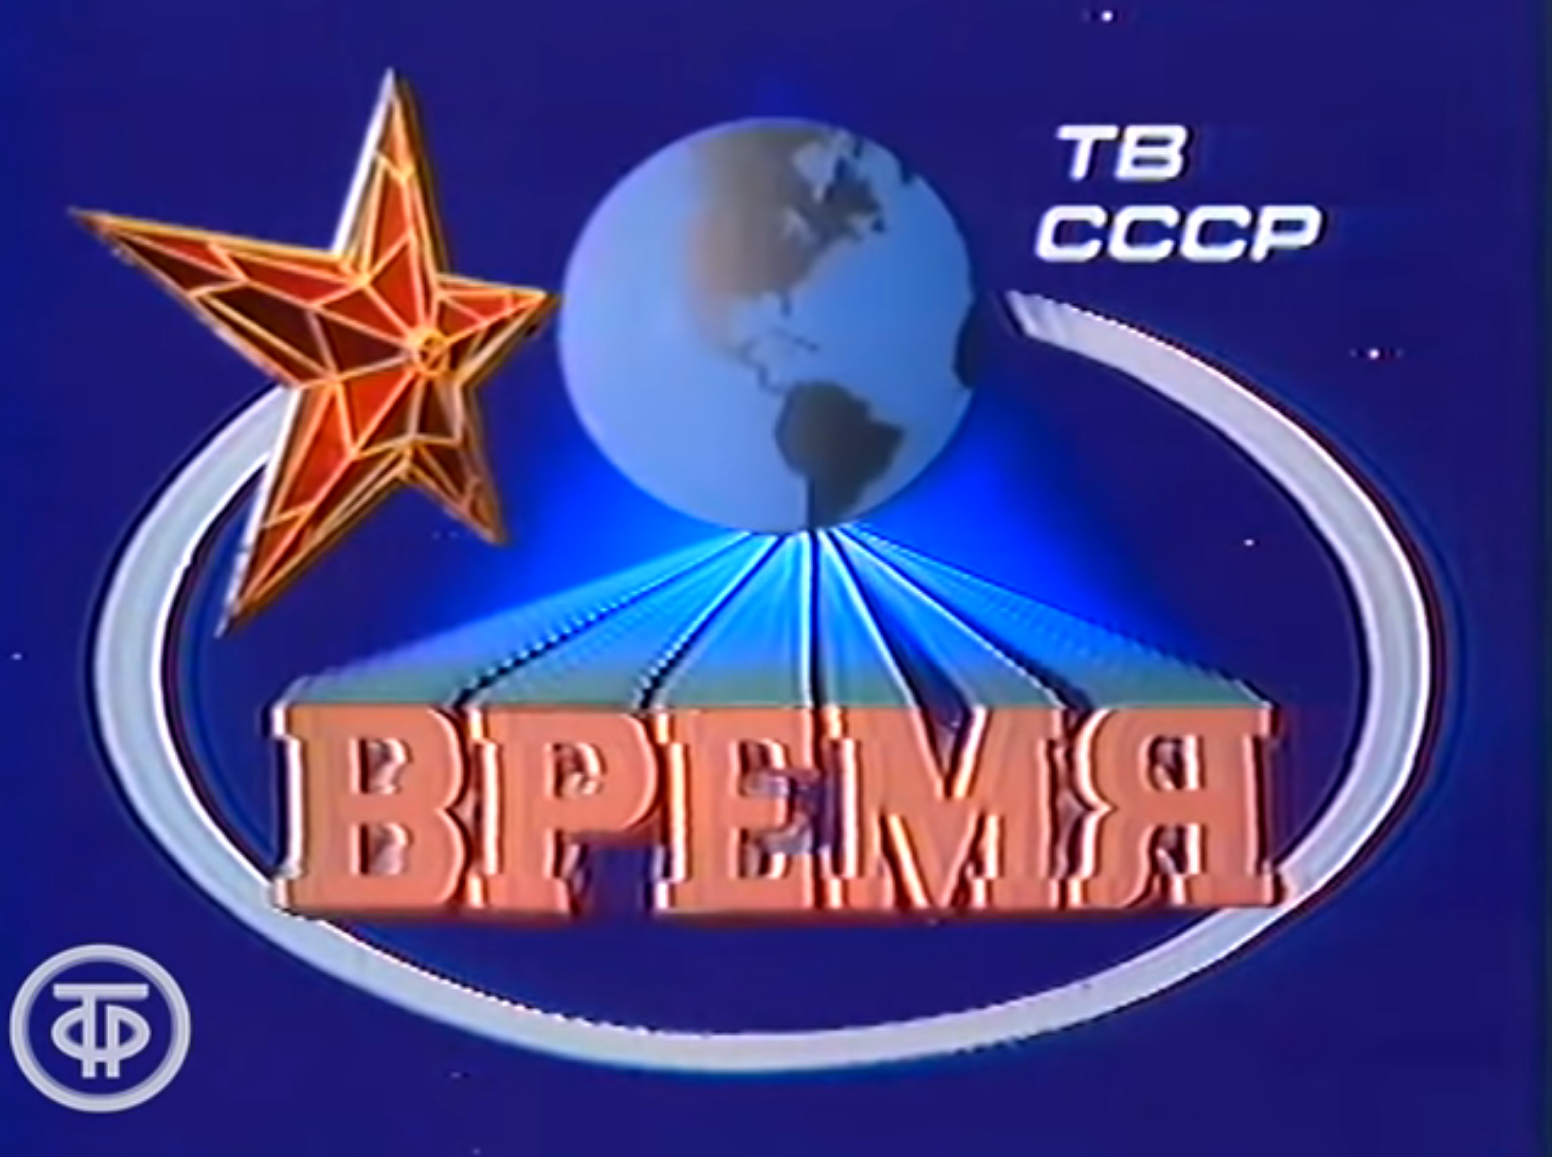 ТВ Программа "Время", 1989г (с) YouTube